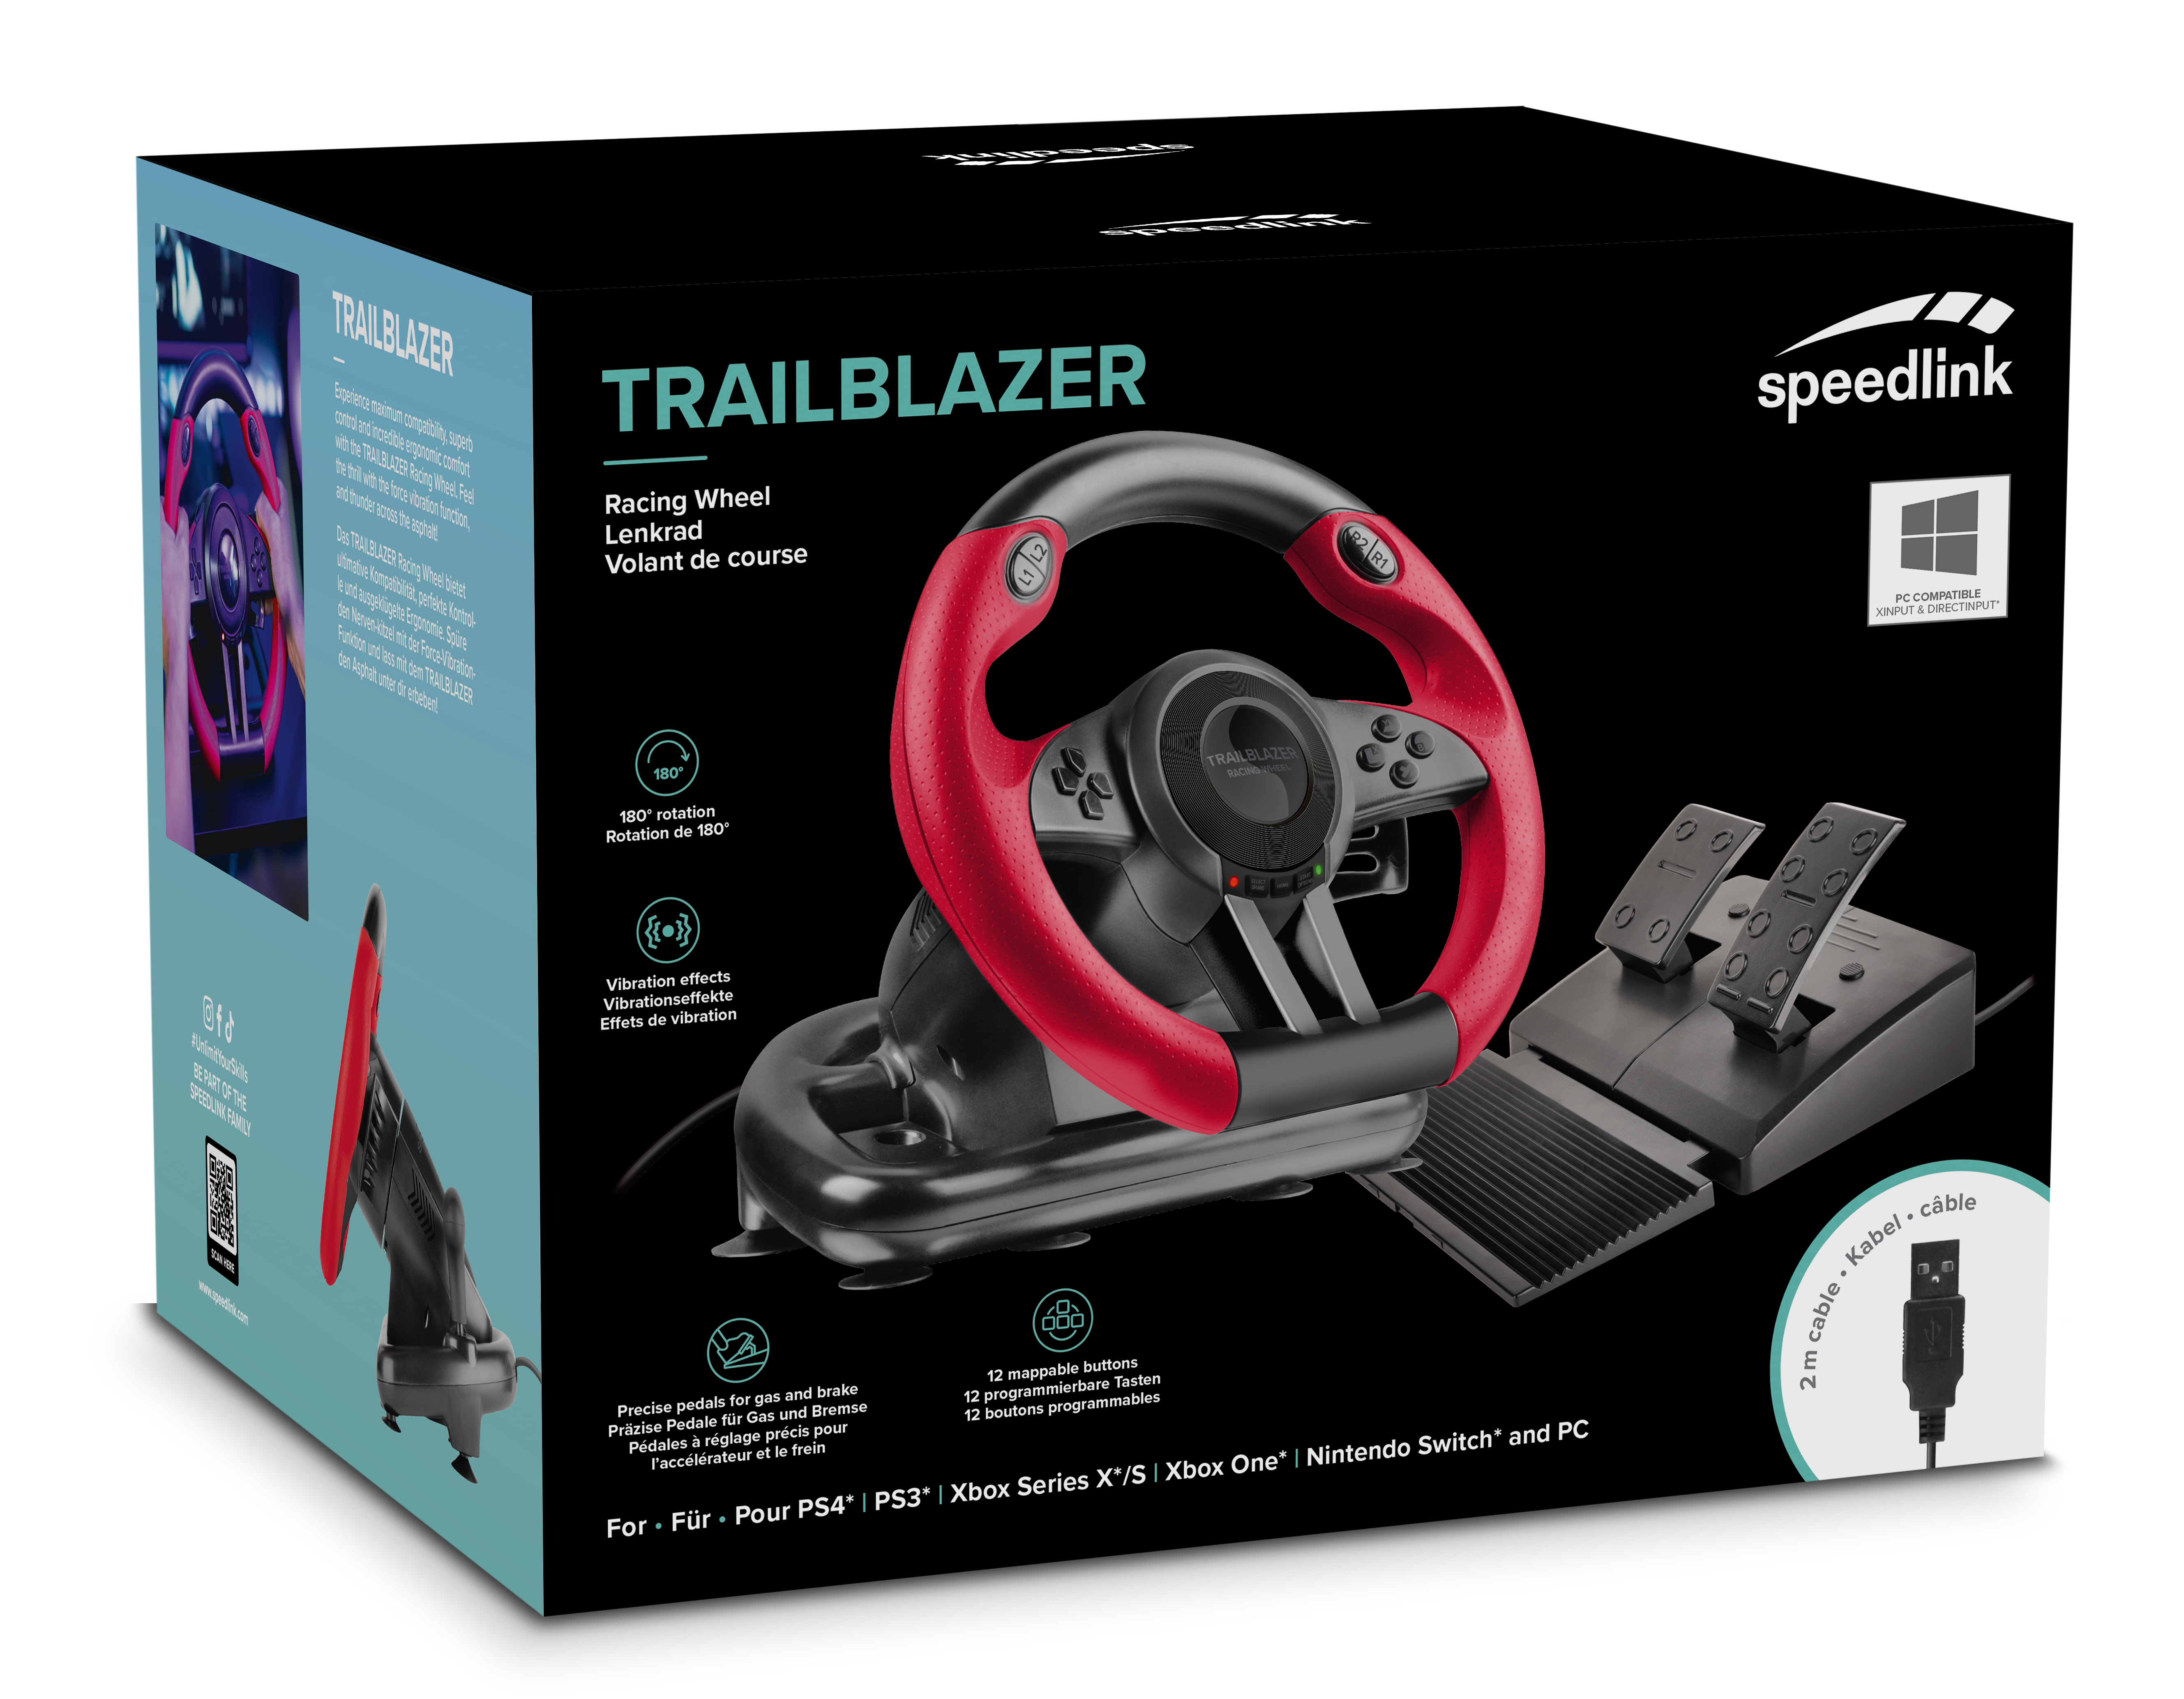 TRAILBLAZER Racing Wheel for PC/PS4/PS3/Xbox Series X/S/One/Switch